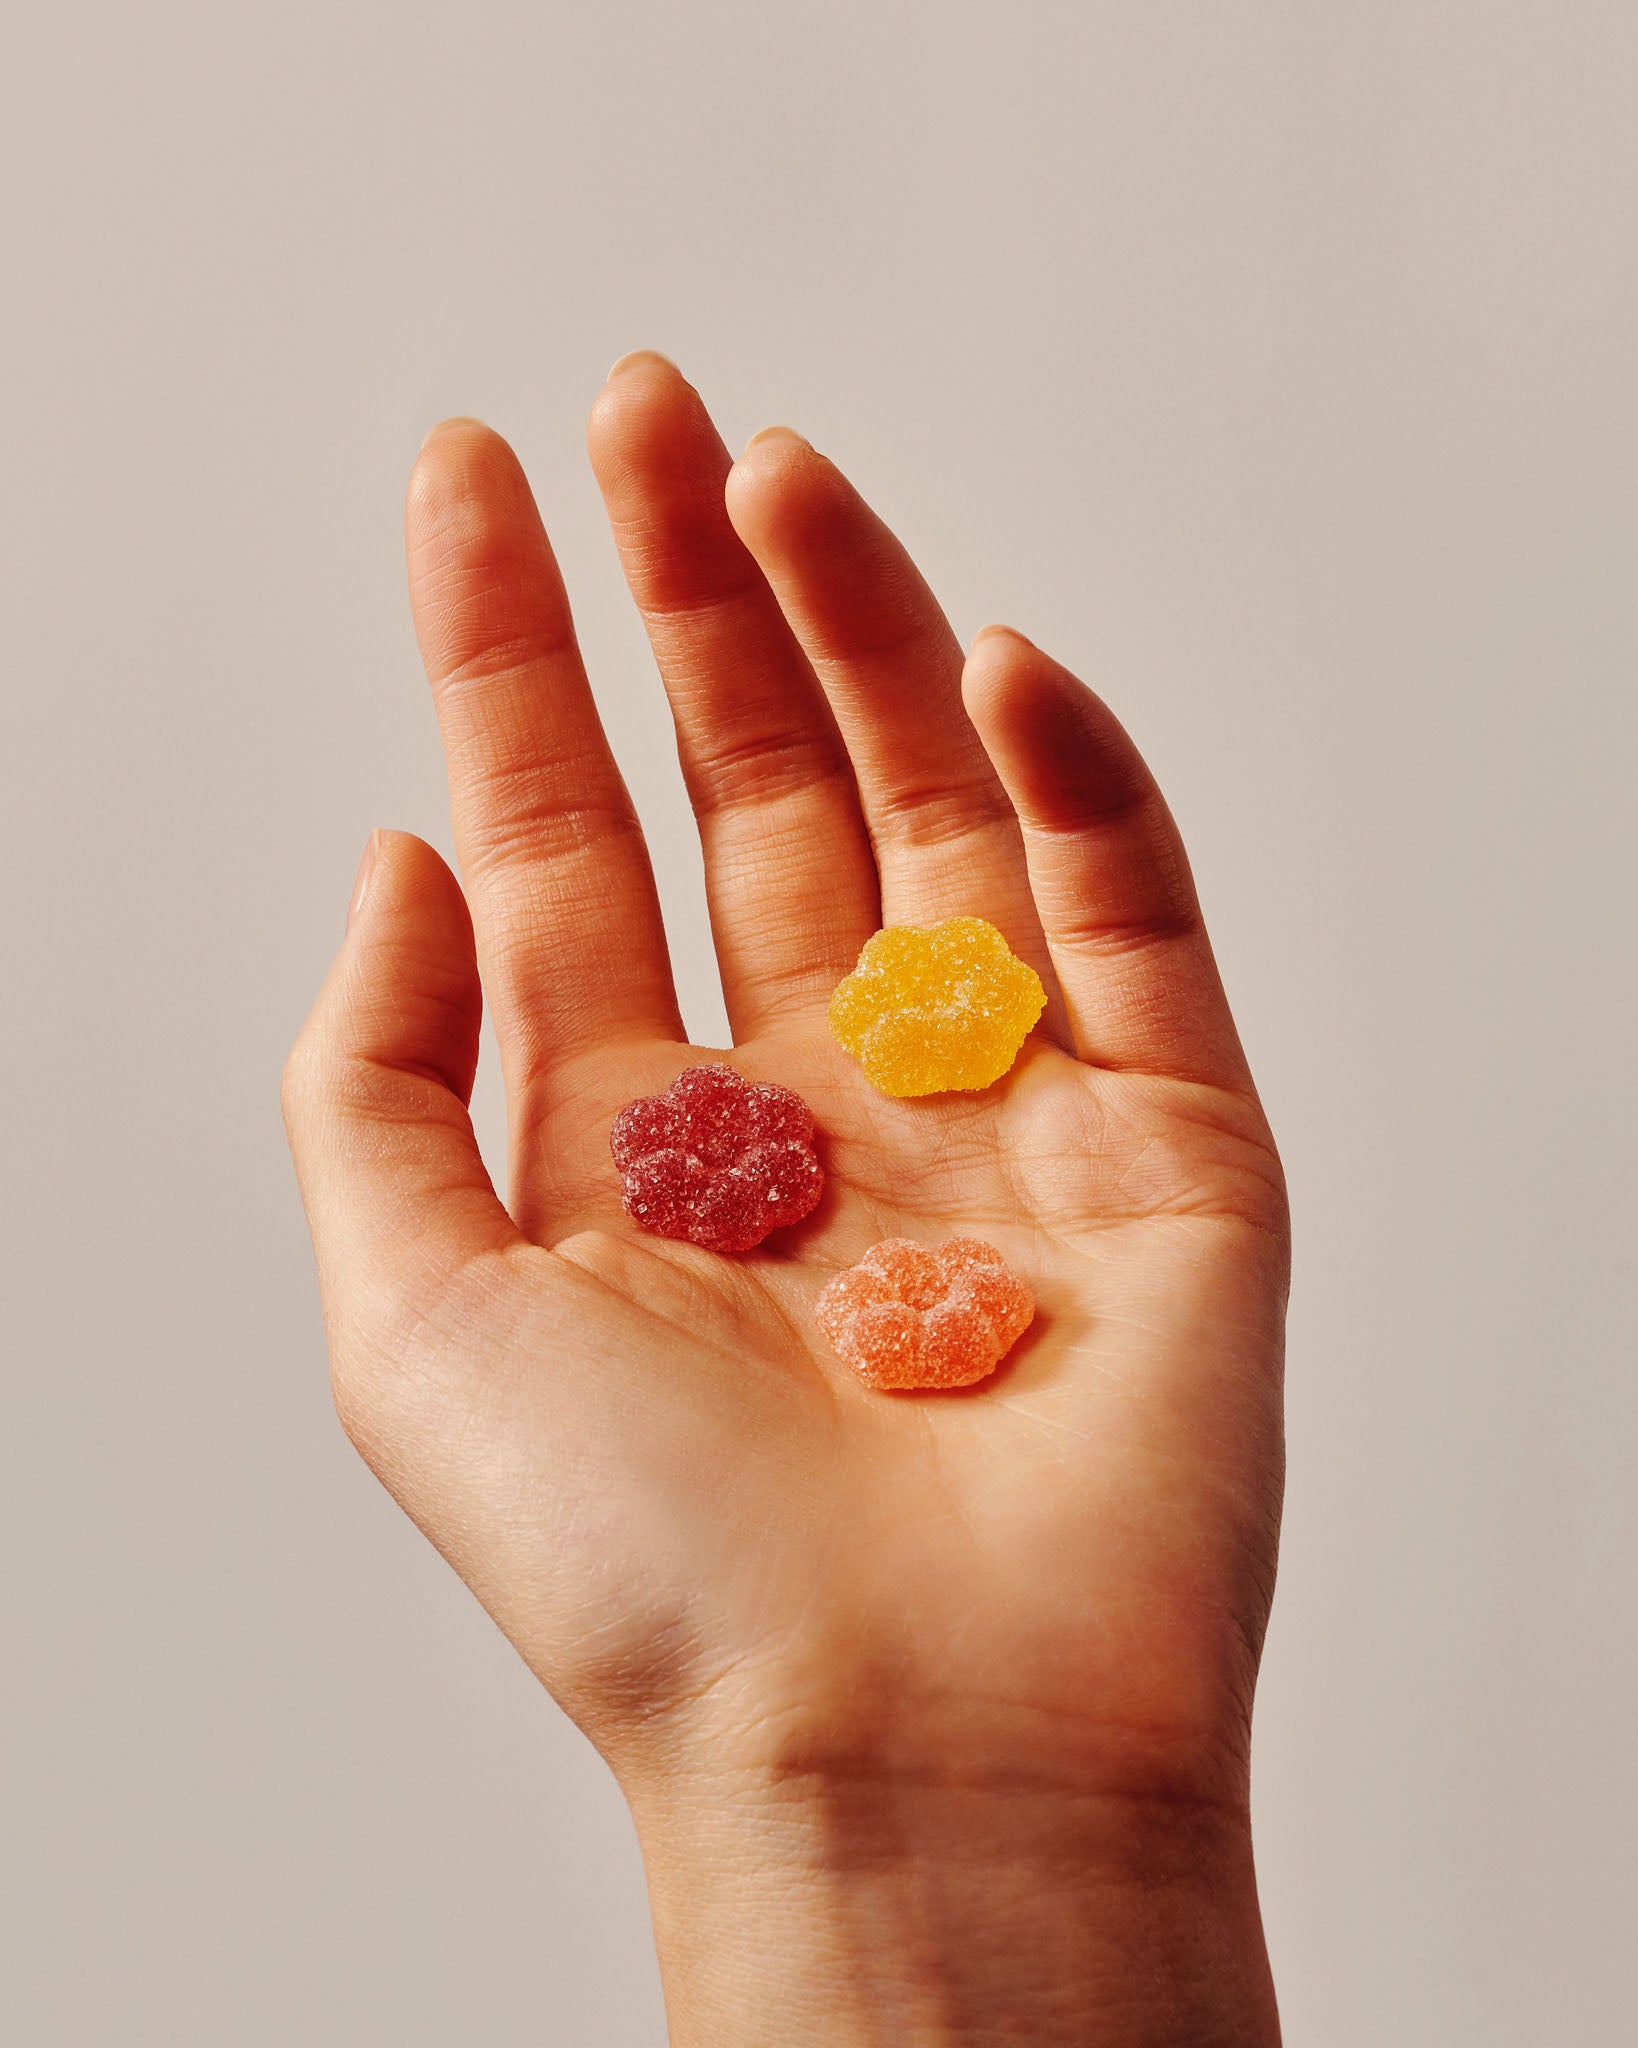 INTRODUCING: Cannabis-infused Gummies